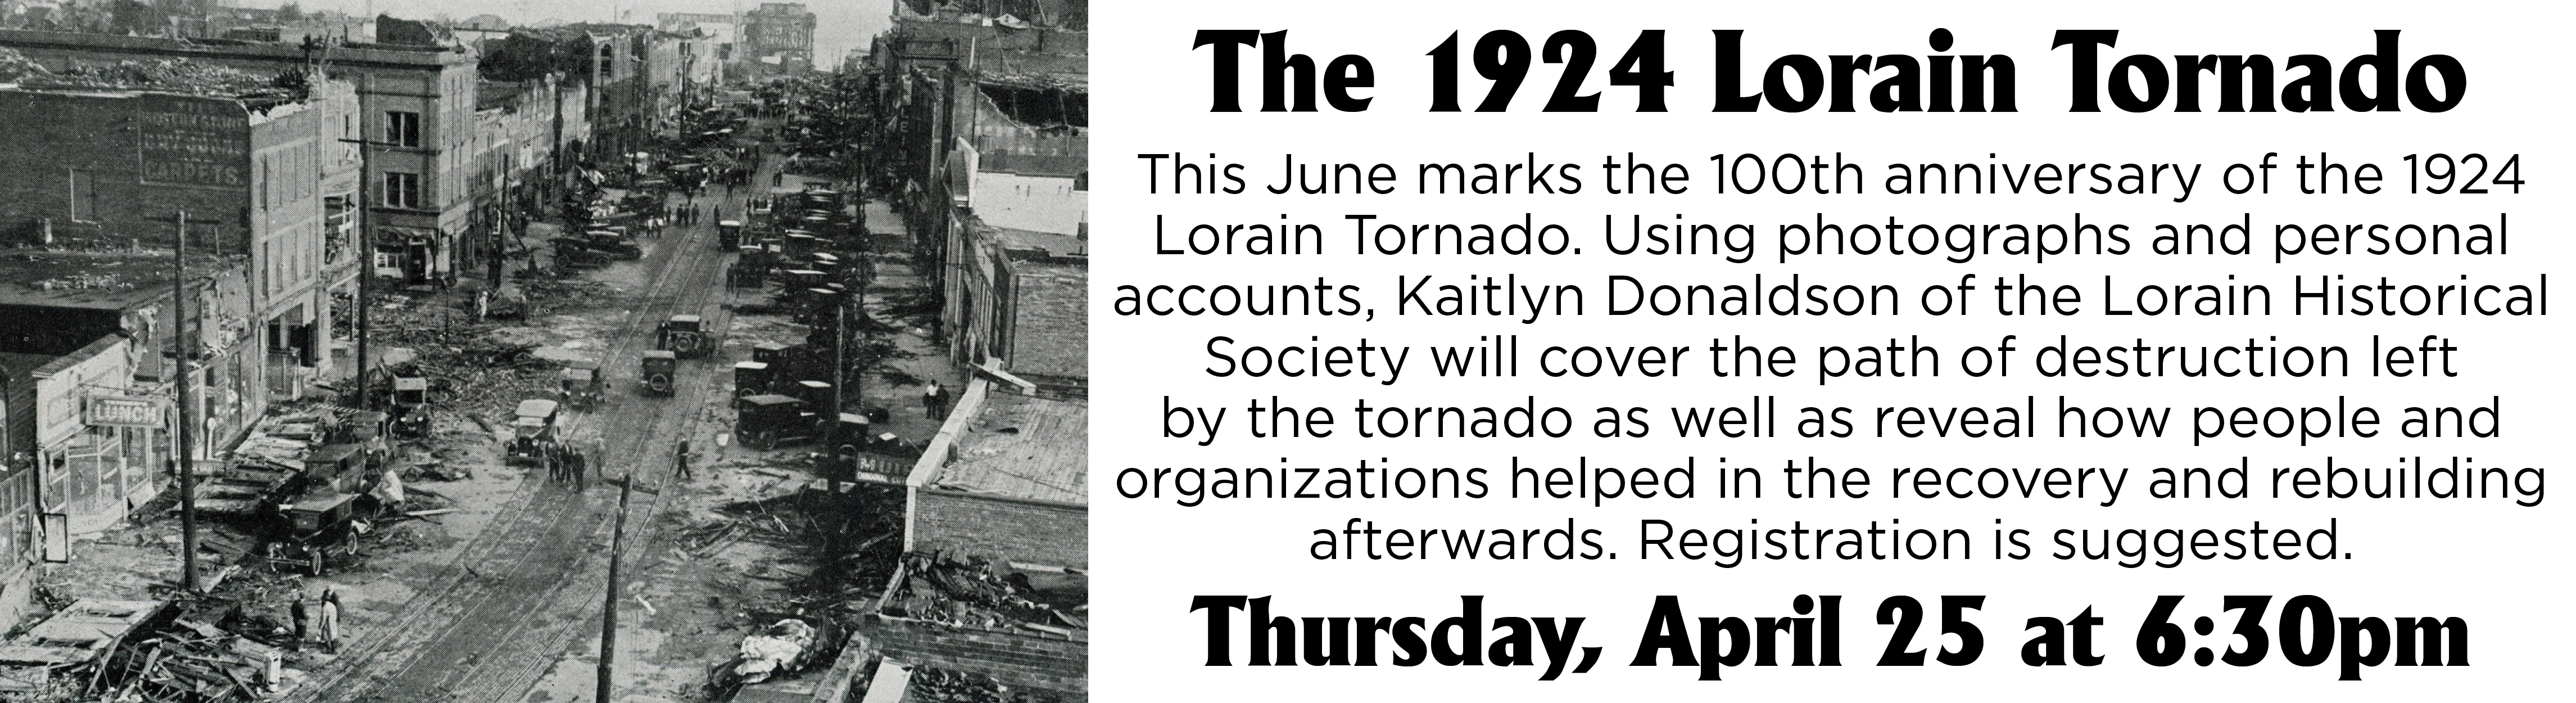 The 1924 Lorain Tornado